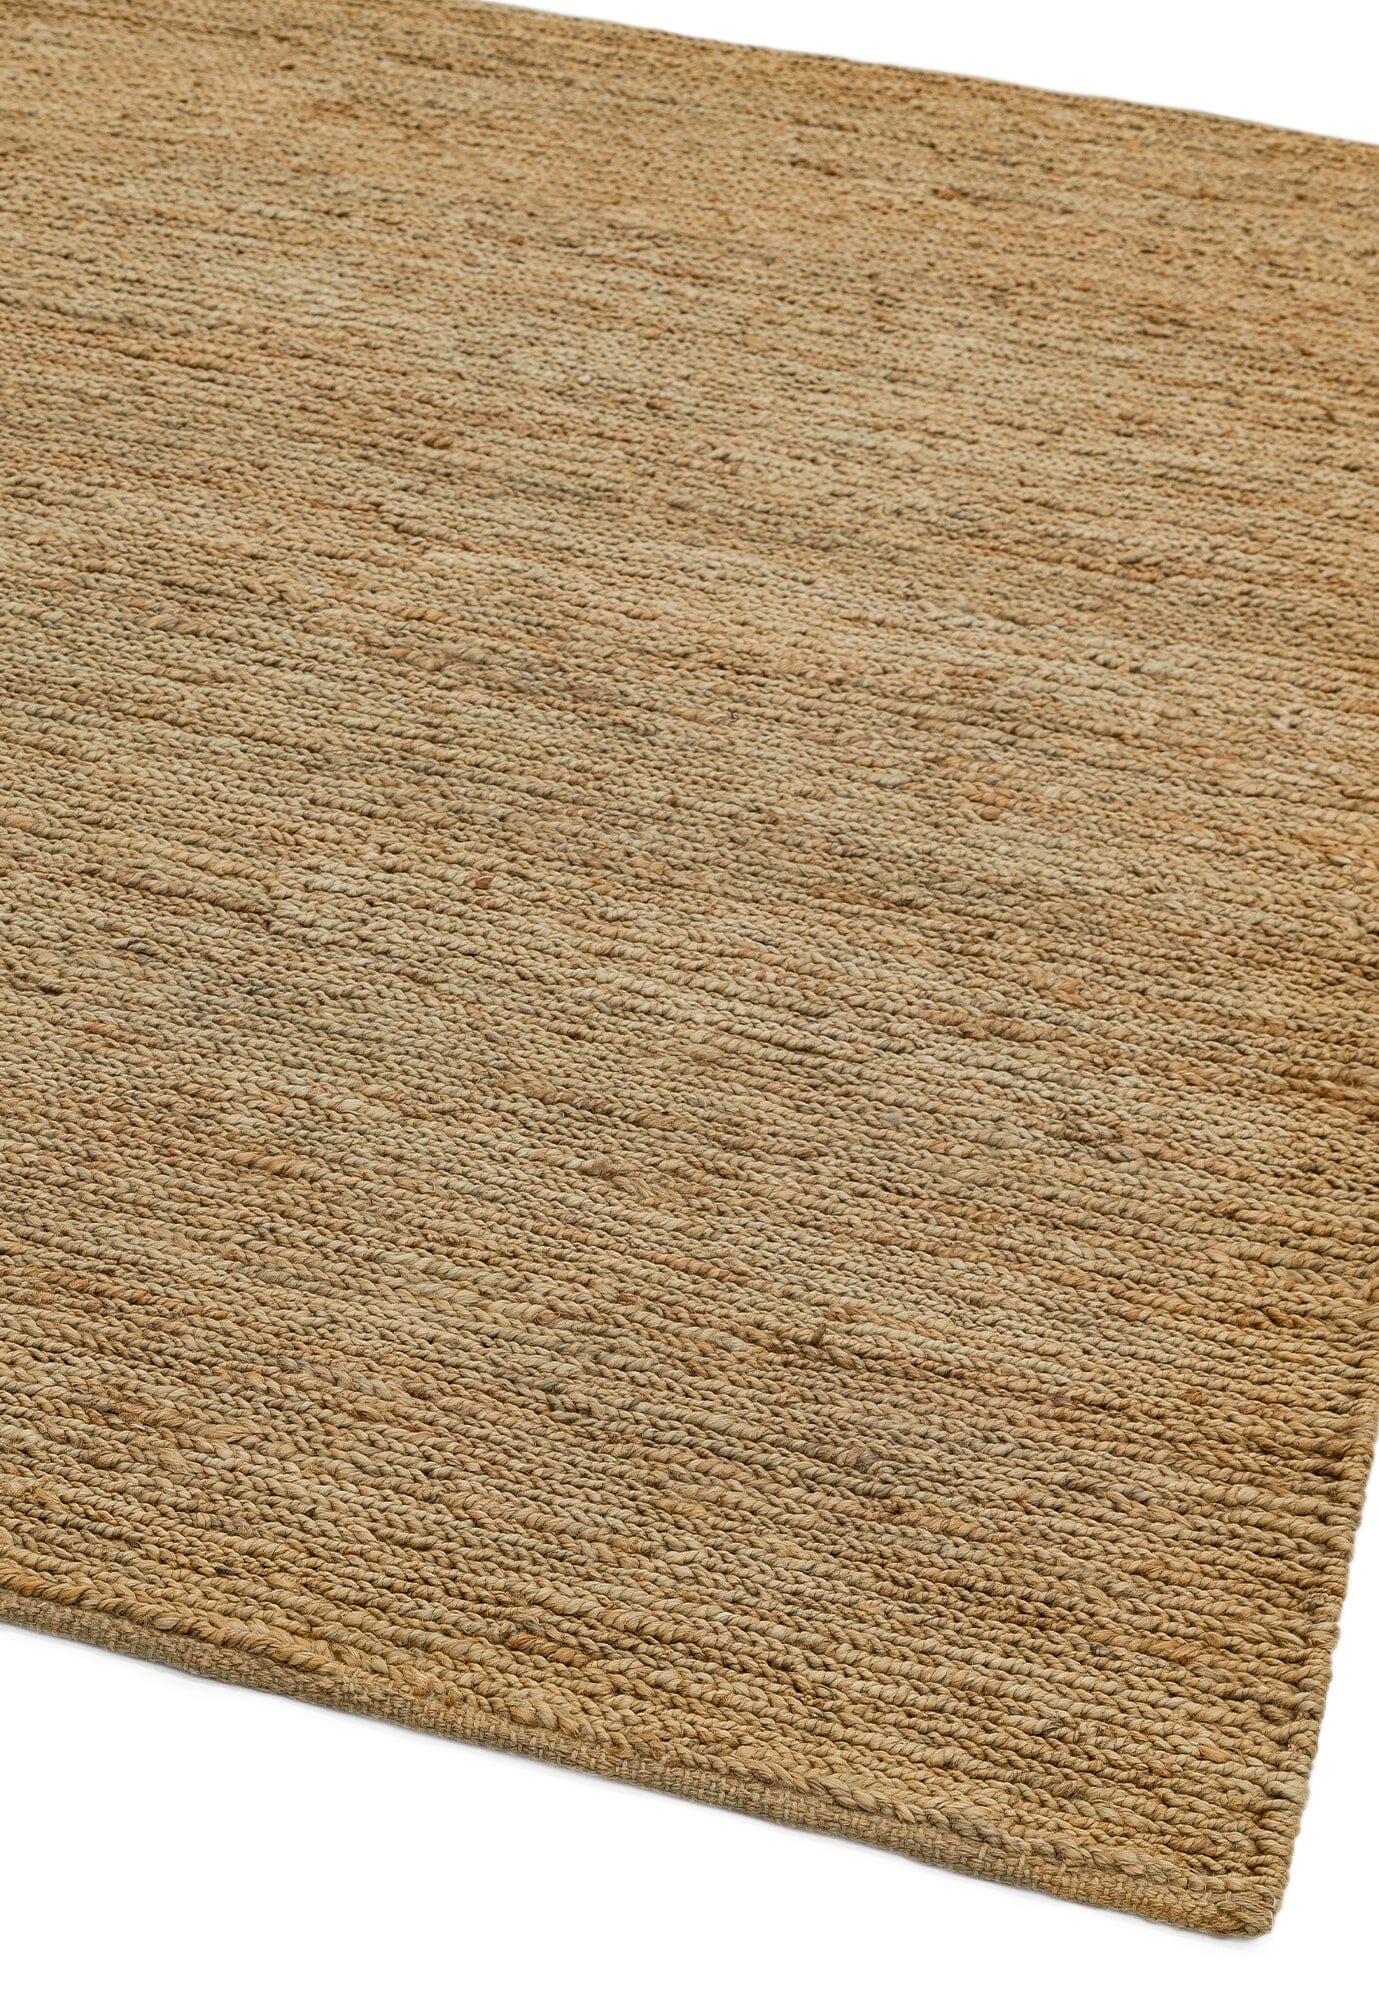  Asiatic Carpets-Asiatic Carpets Soumak Hand Woven Runner Natural - 66 x 200cm-Beige, Natural 285 